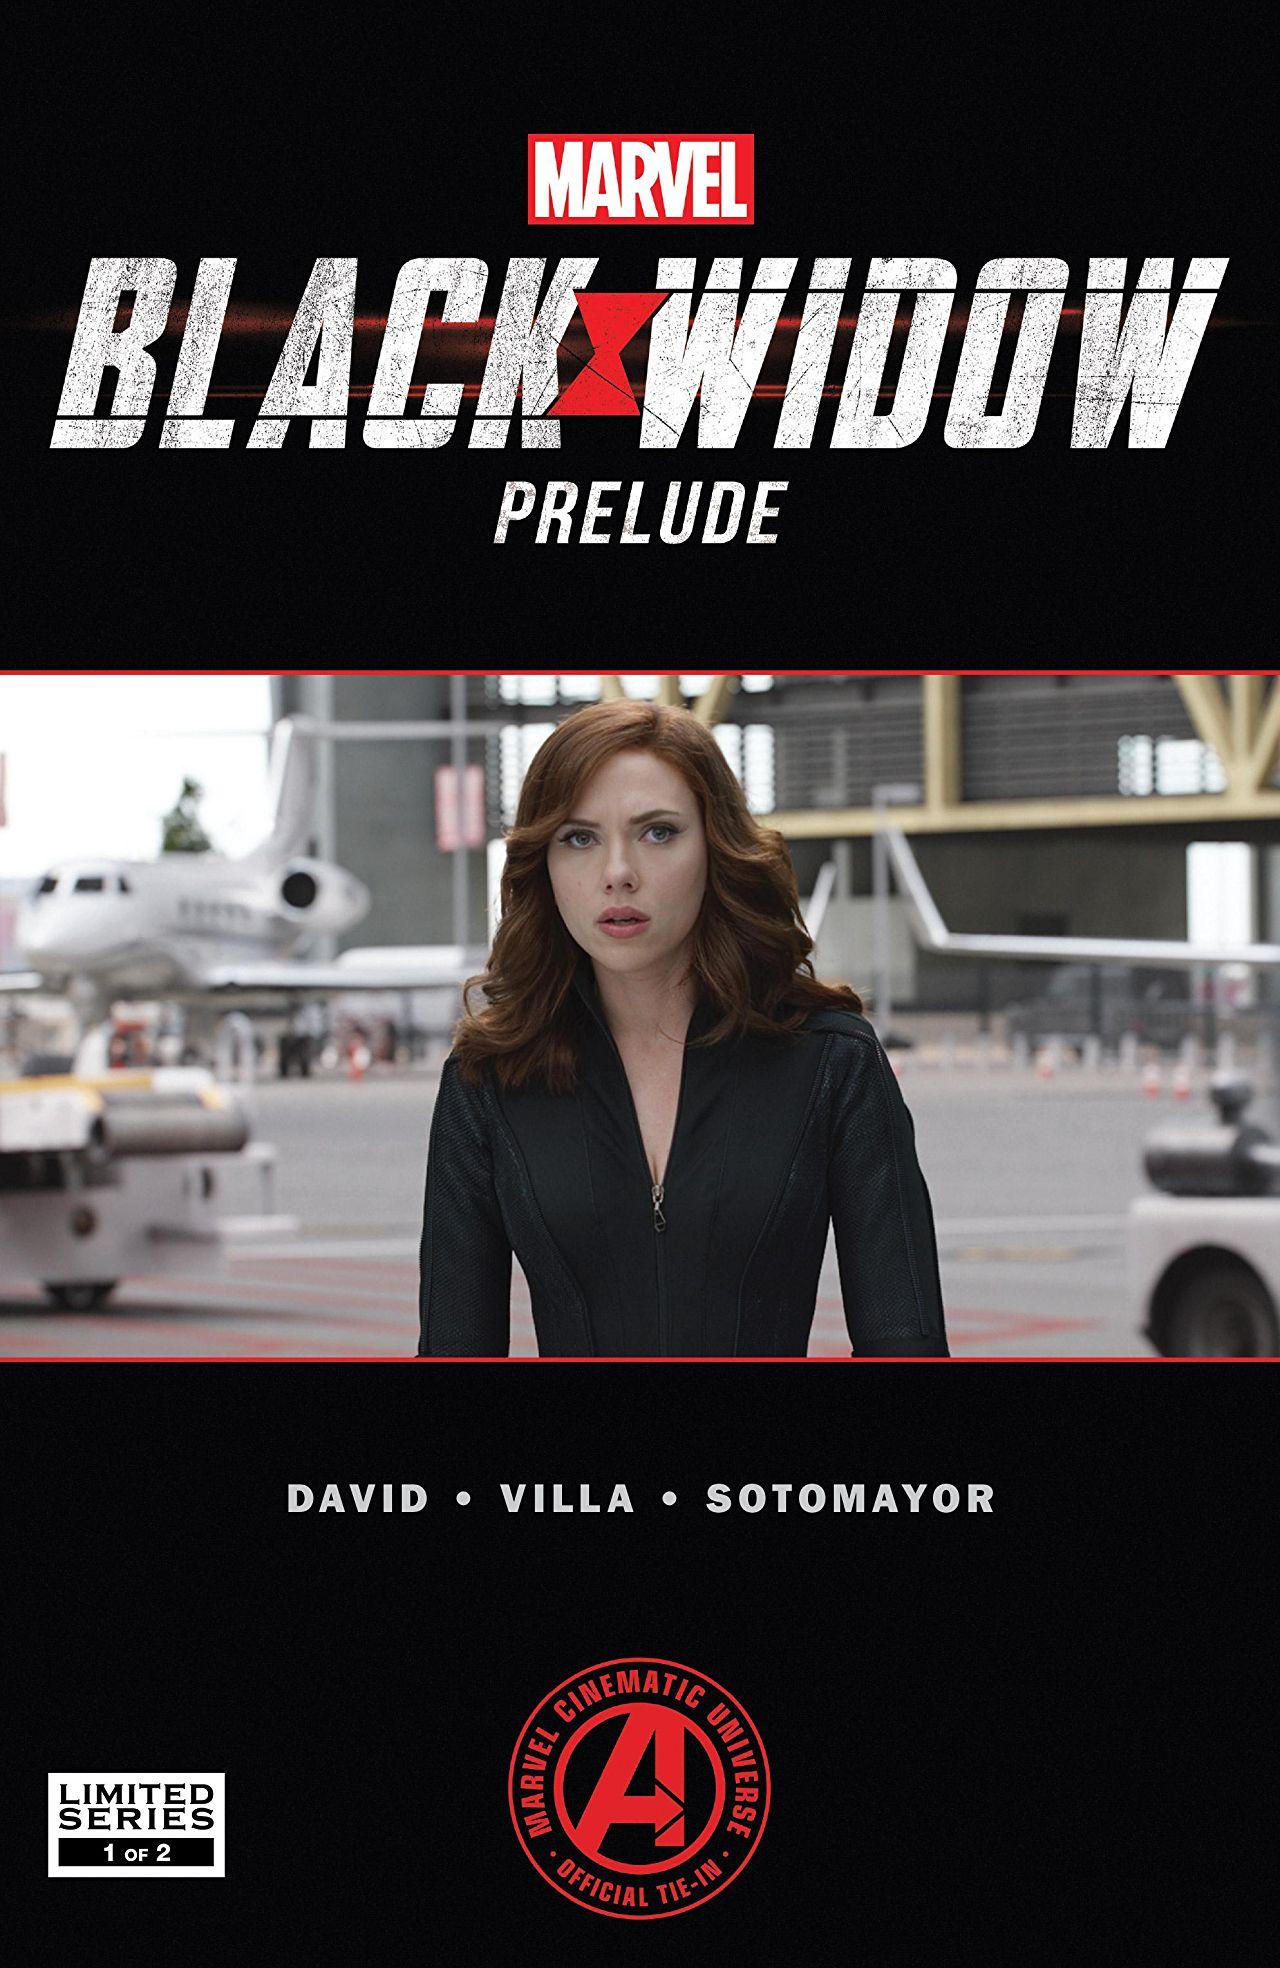 Marvel's Black Widow Prelude Vol. 1 #1